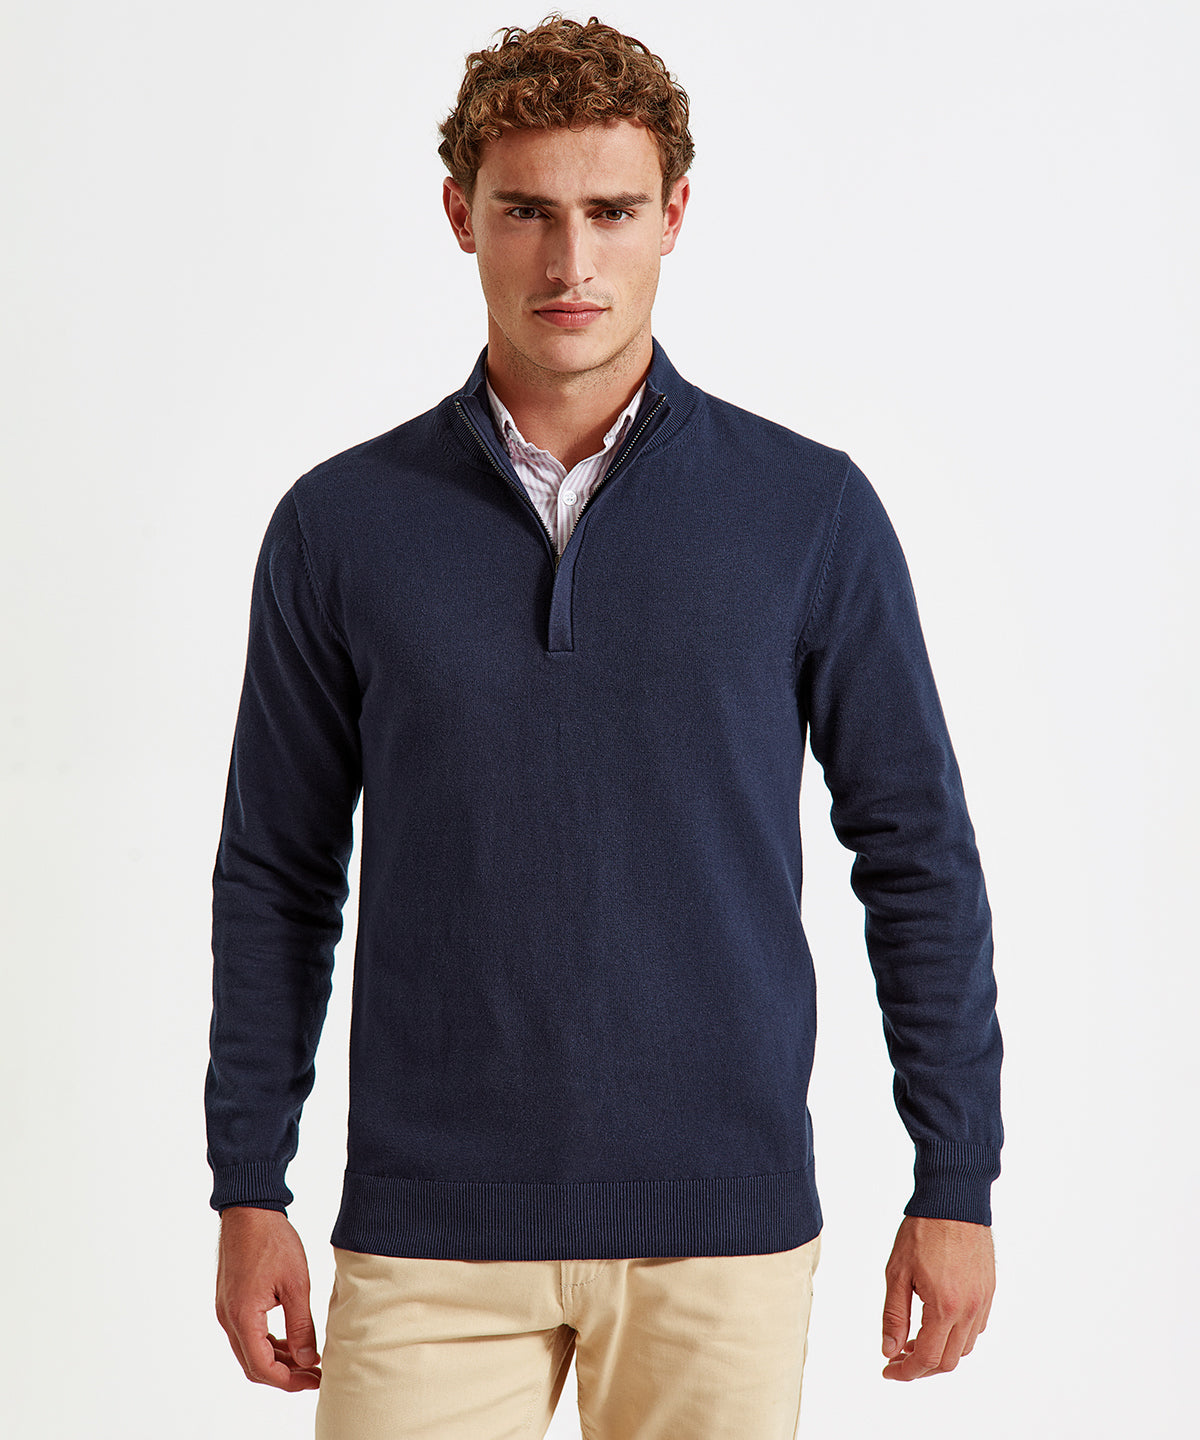 Men's cotton blend Â¼ zip sweater